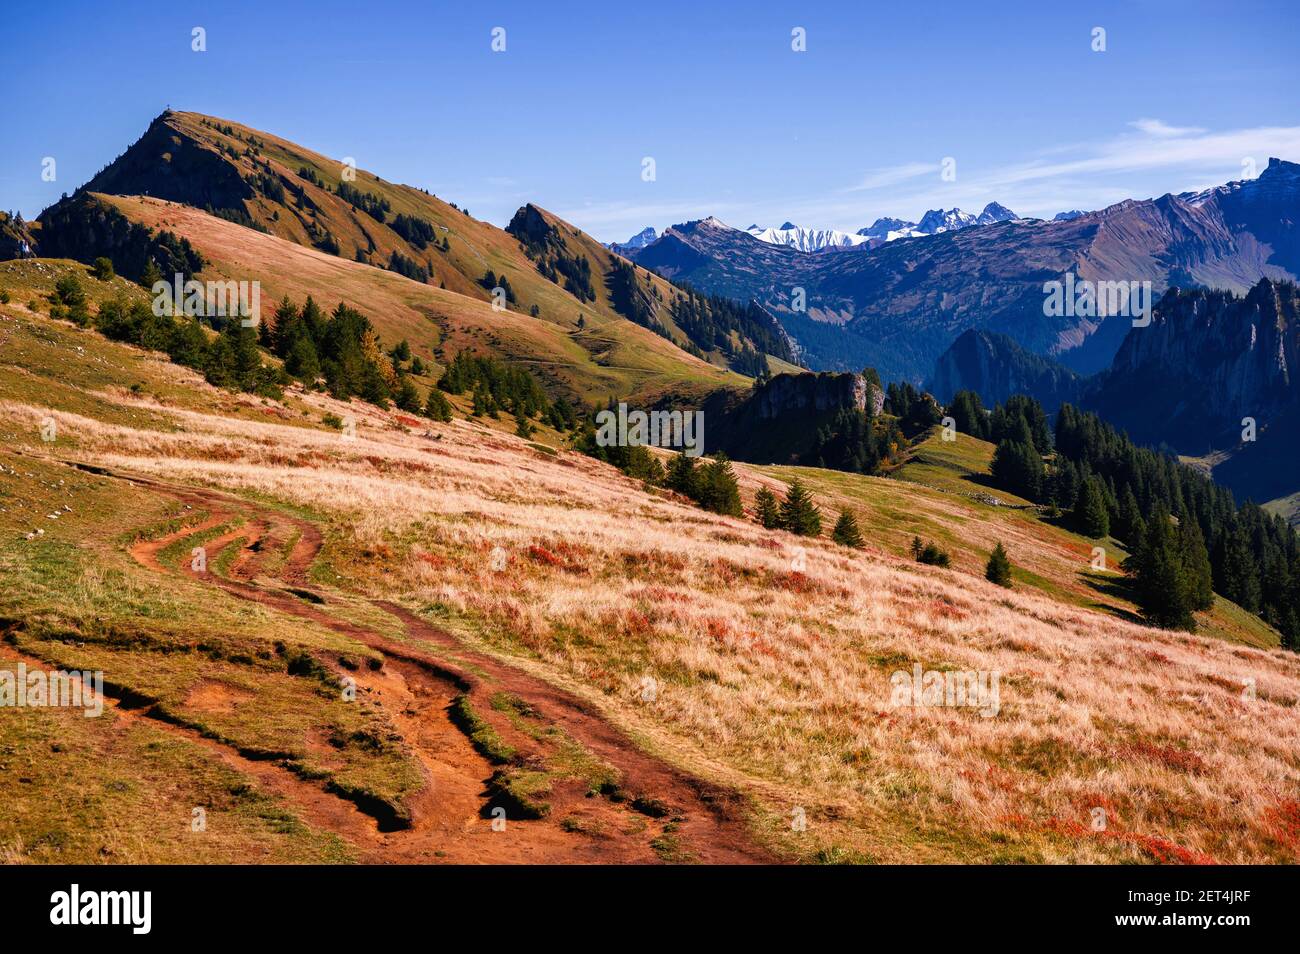 Ridgeway, hillside and peak of Hintere Niedere hill in Austrian Alps, Bregenzerwald, Austria, in autumn sunny day. With snowy mountain peaks in backgr Stock Photo